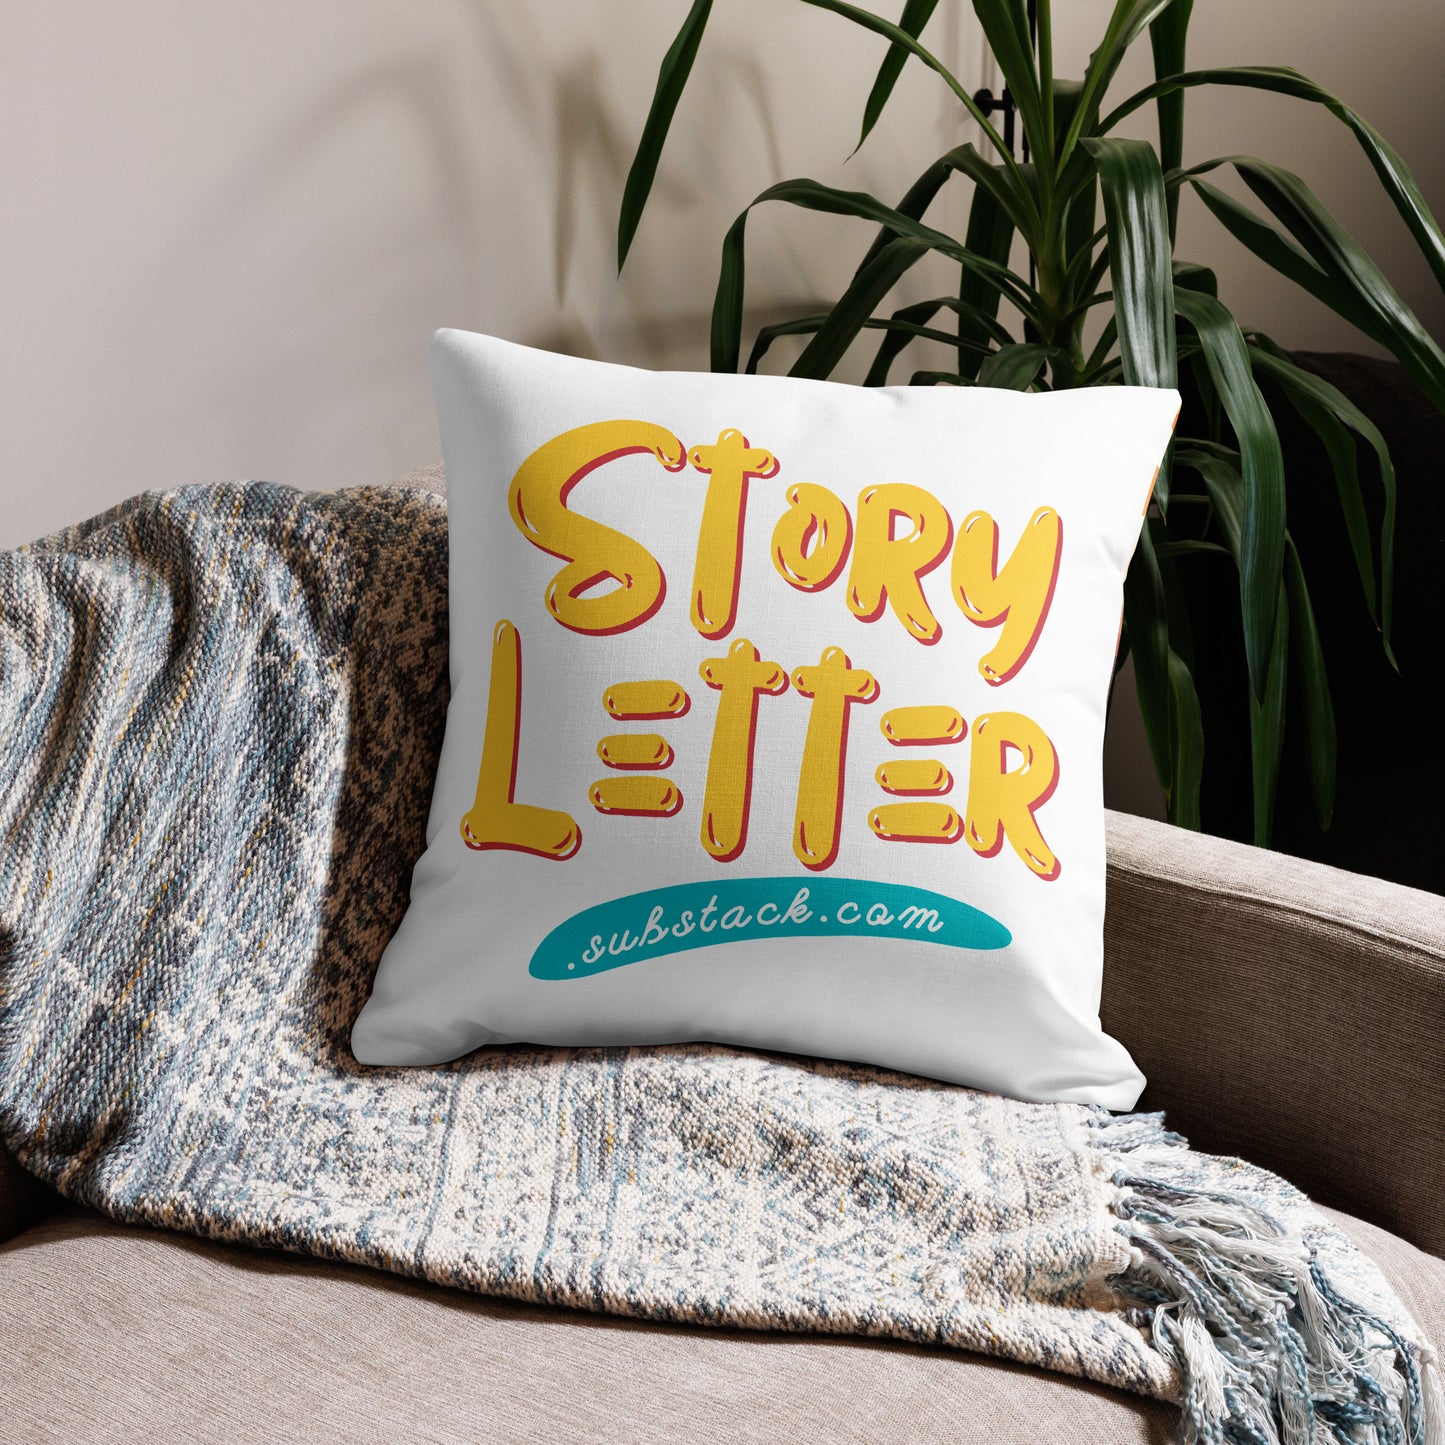 Storyletter Premium Pillow - Stormfallen Edition